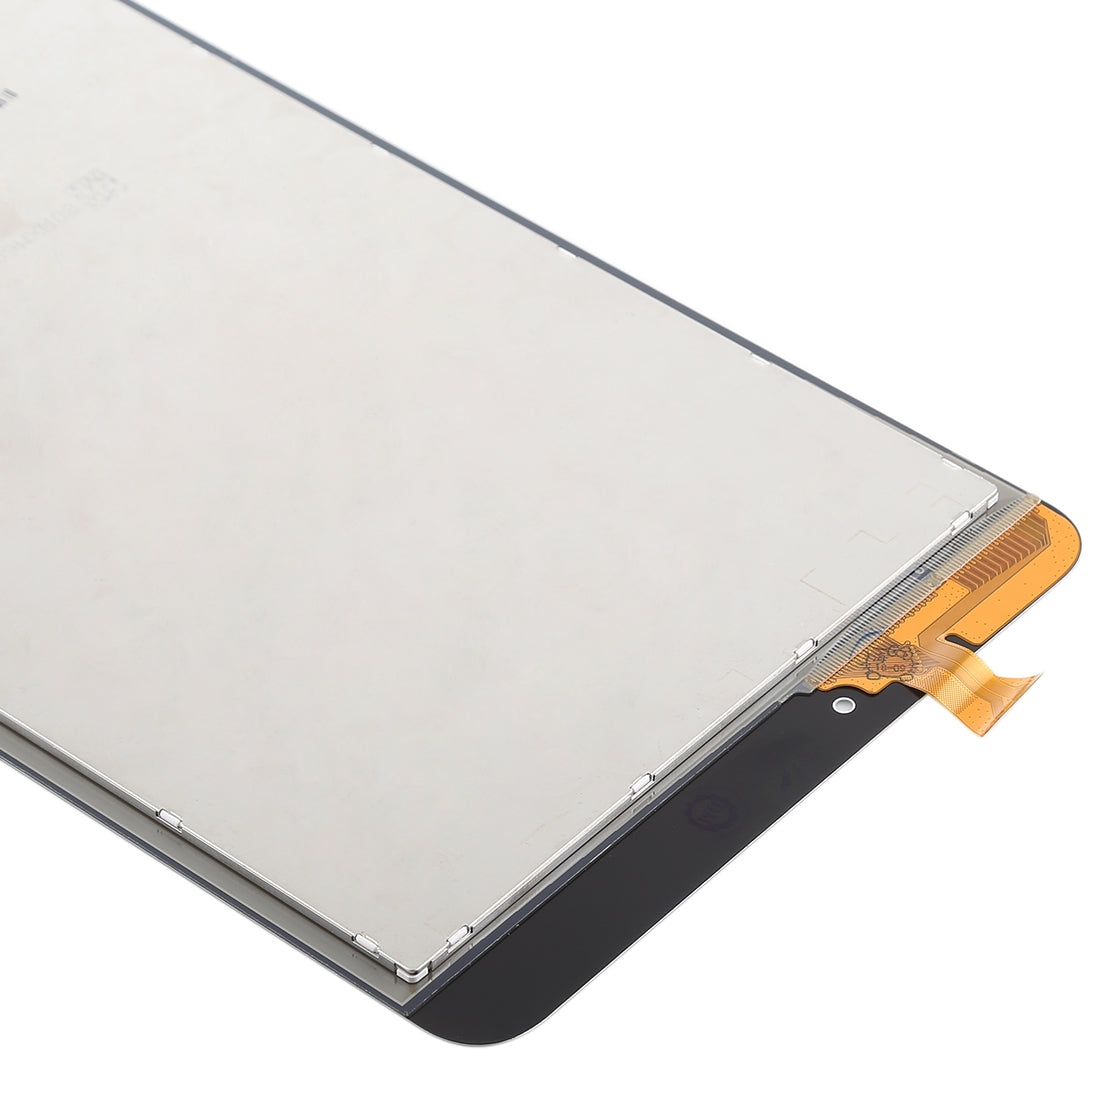 LCD + Touch Screen Samsung Galaxy Tab E 8.0 T377 (Wifi Version) White